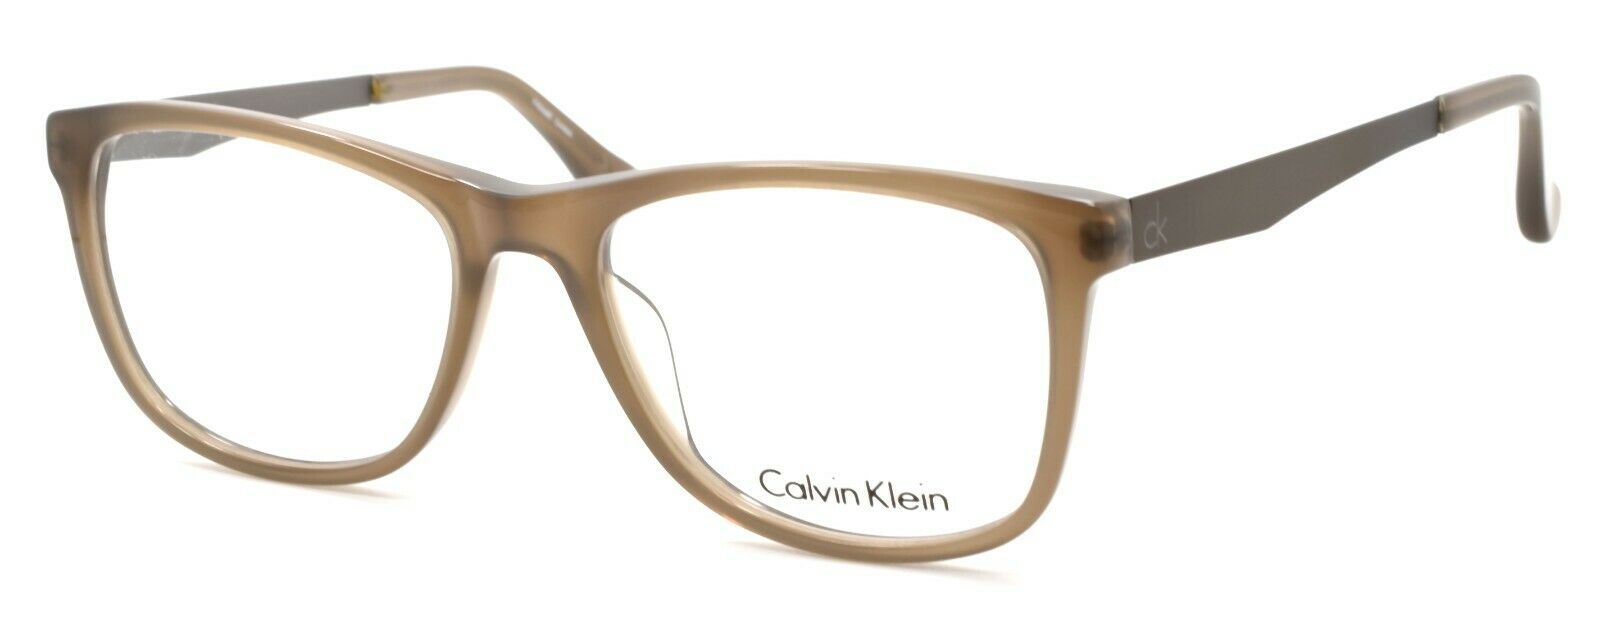 1-Calvin Klein CK5882 042 Men's Eyeglasses Frames 52-18-140 Turtledove-750779081785-IKSpecs